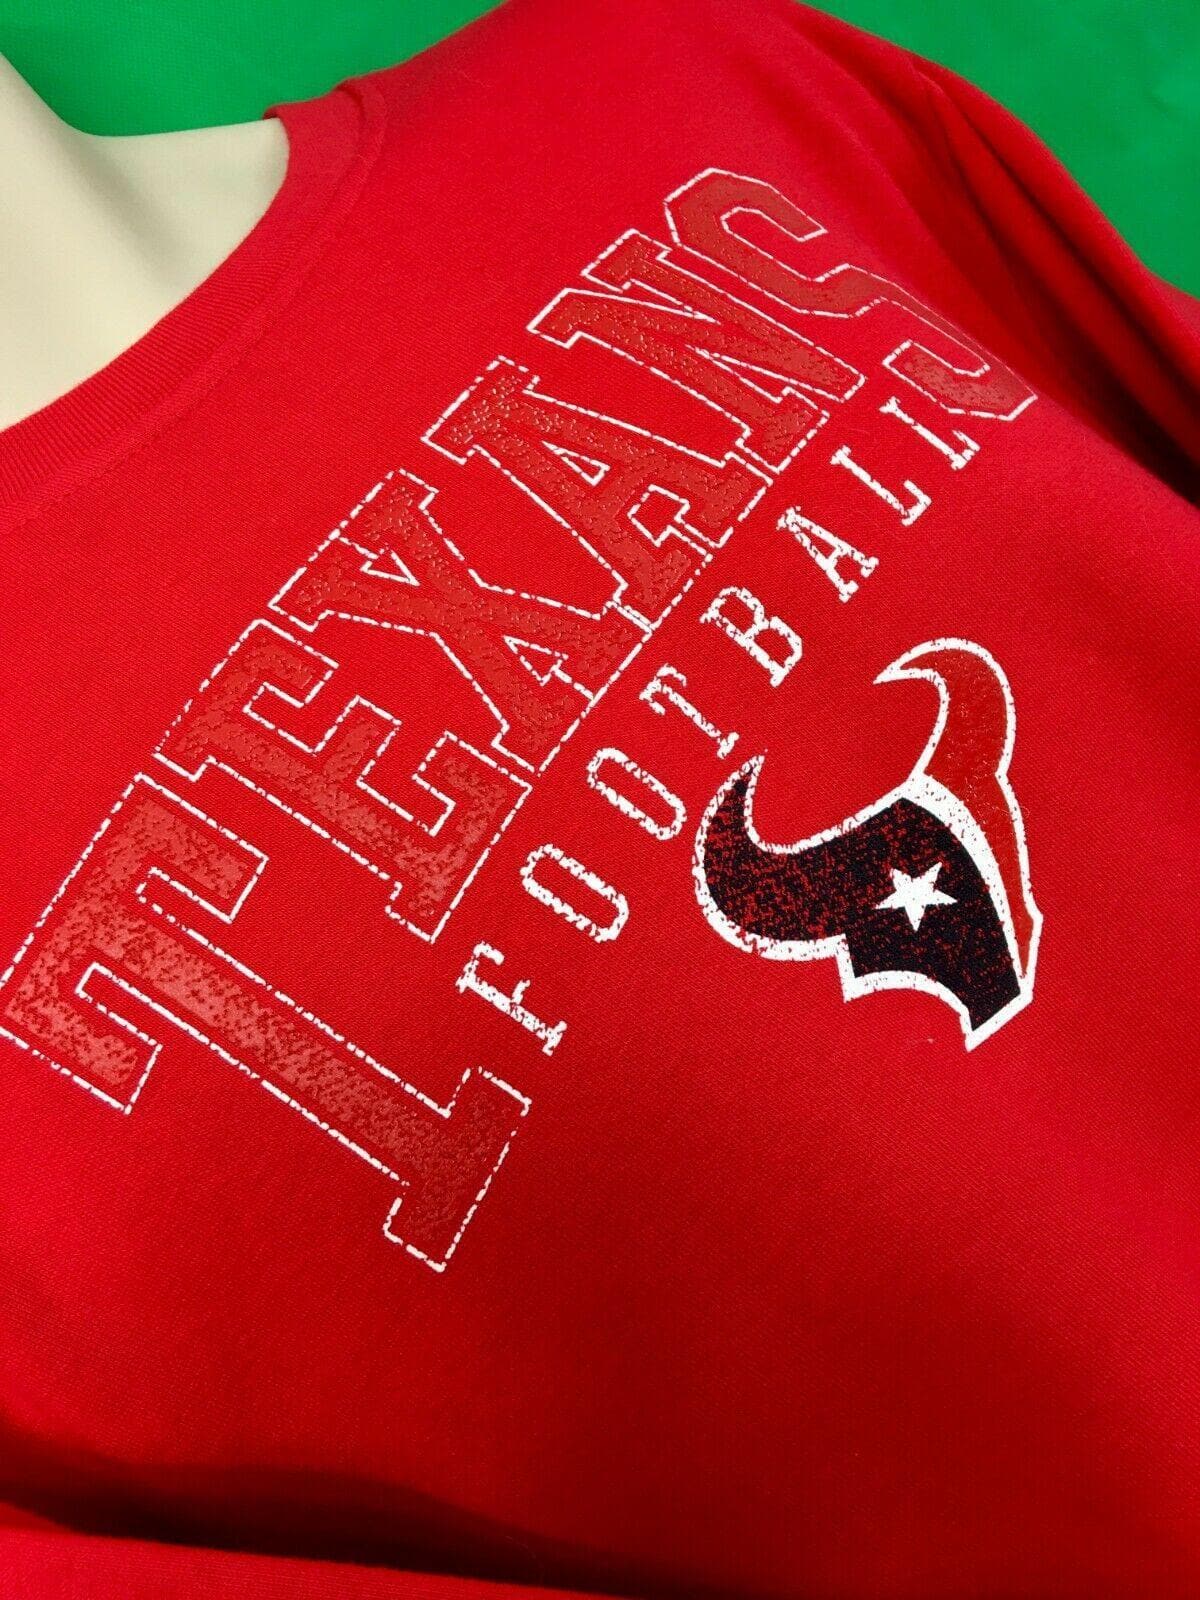 NFL Houston Texans Pro Line Sweatshirt Men's Large NWOT